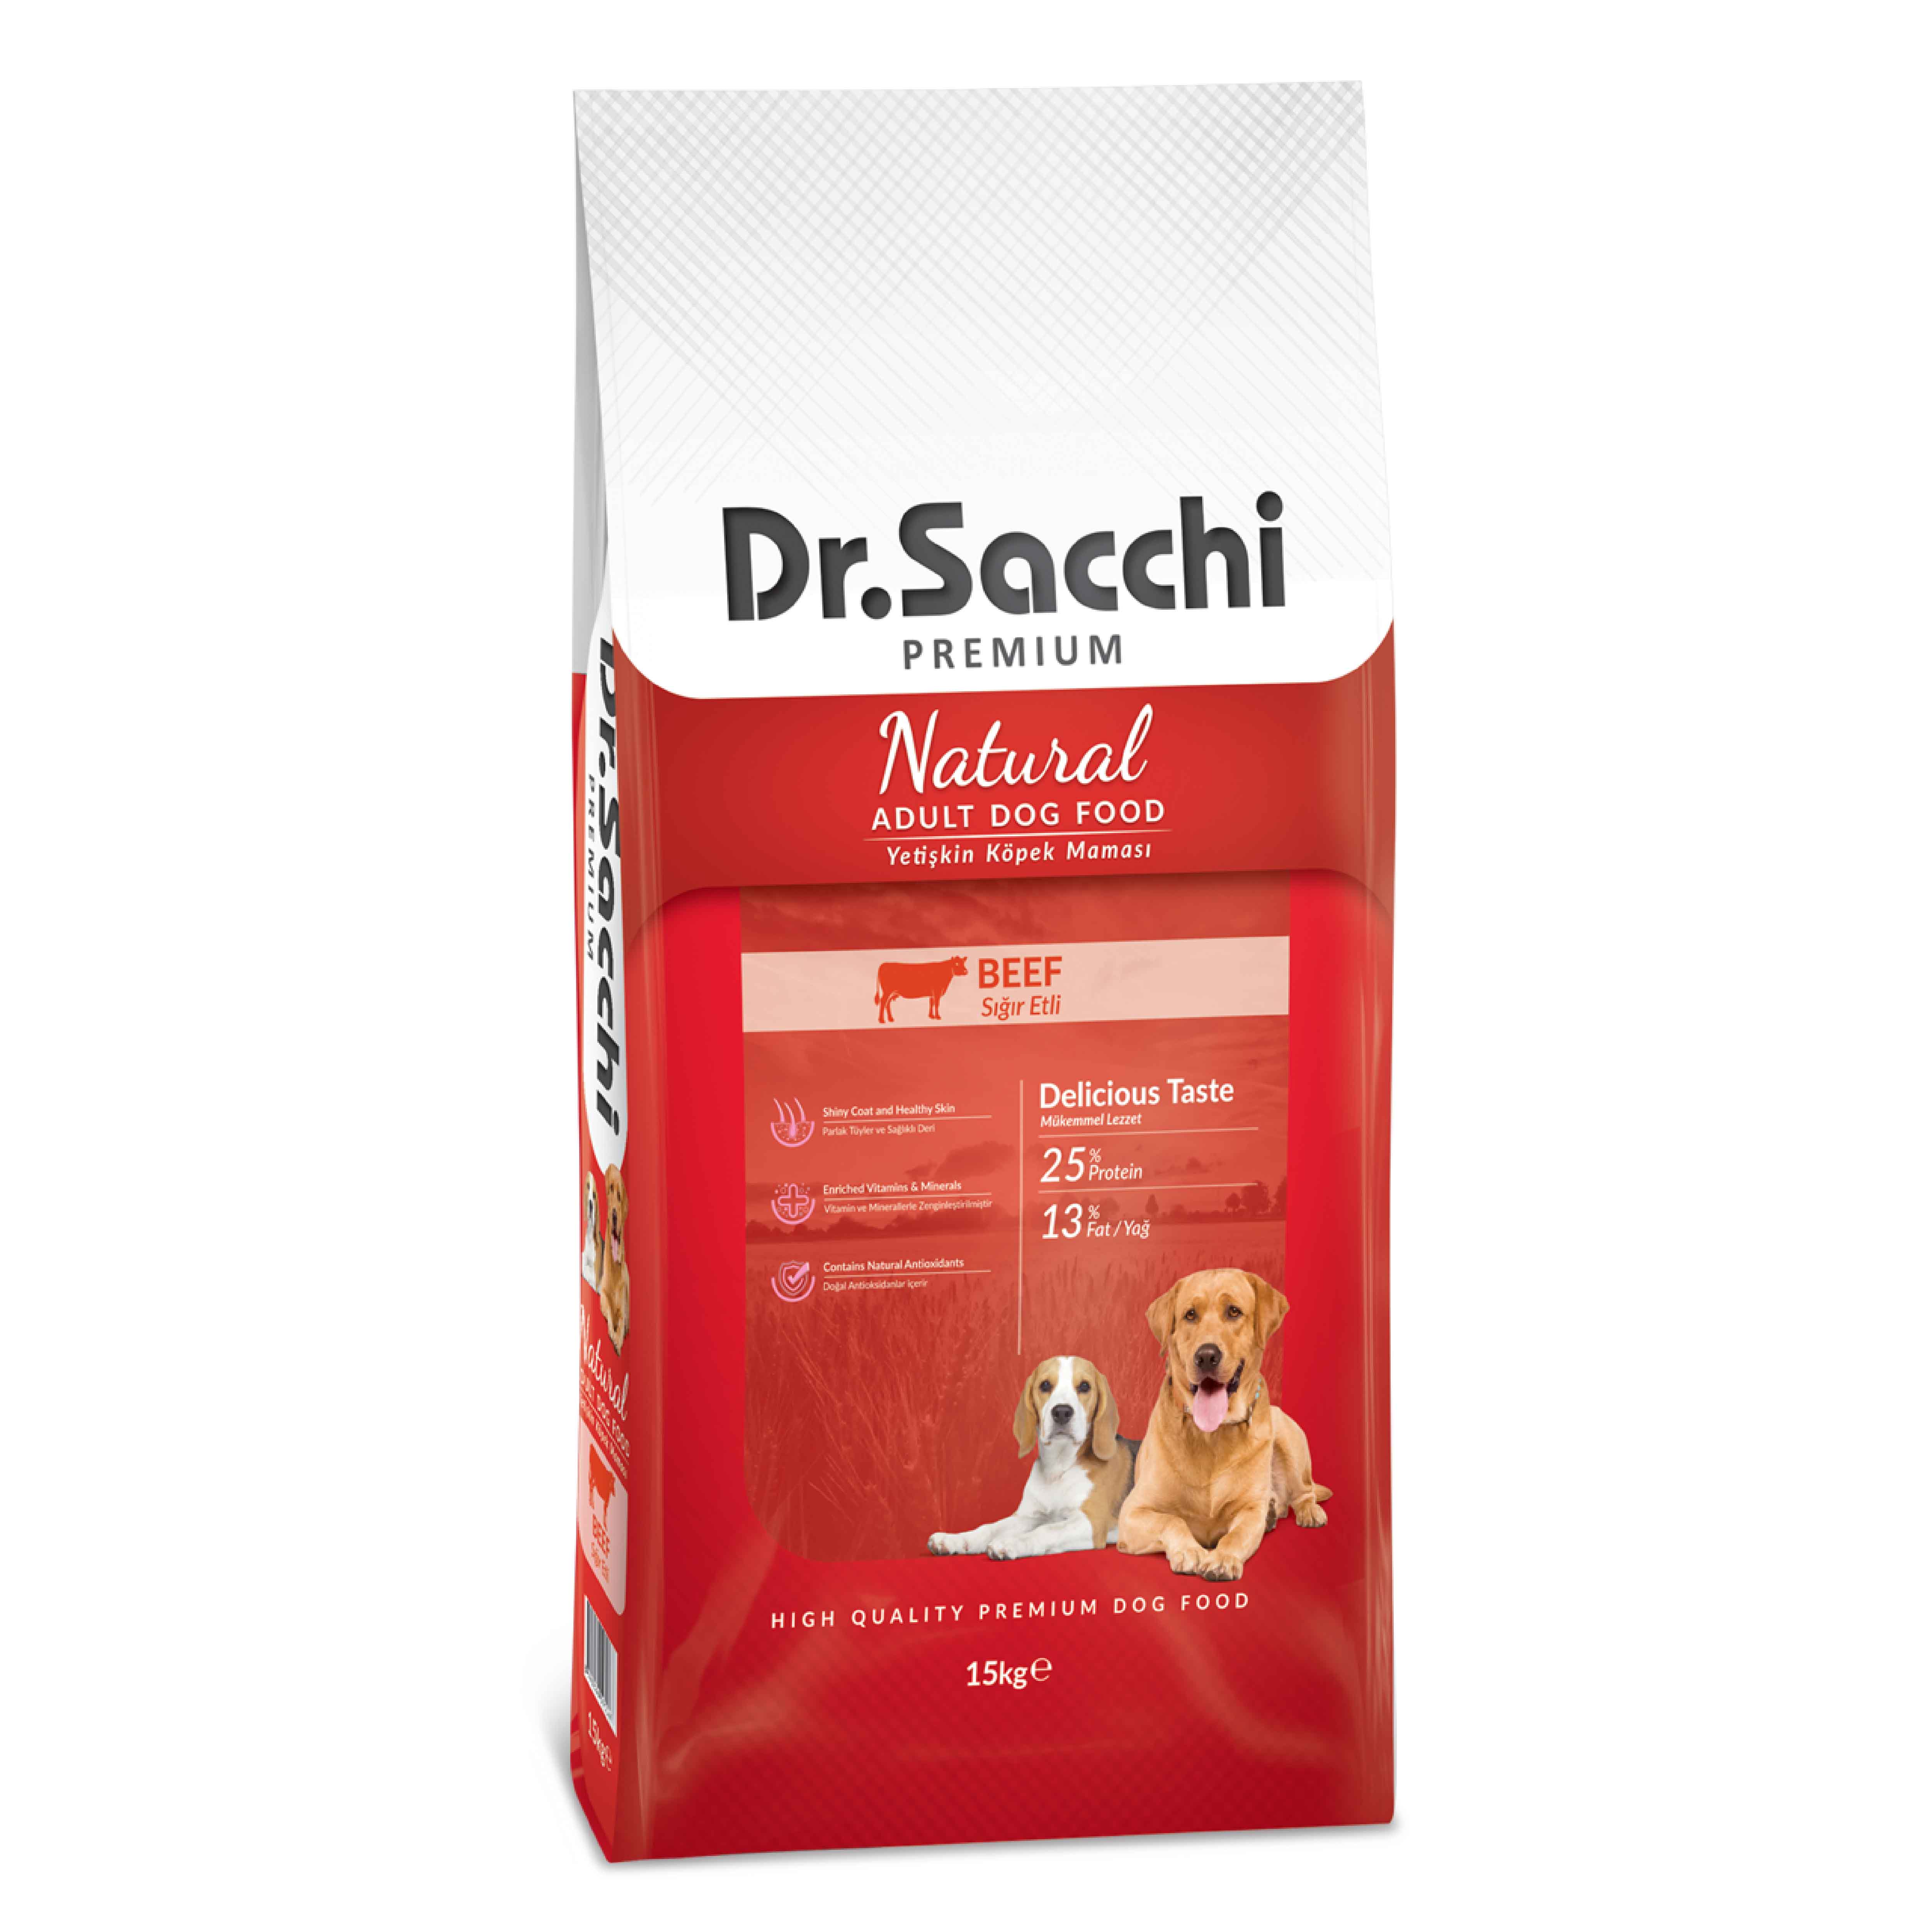 Dr.Sacchi Premium Natural Beef Yetişkin Köpek Maması 15kg